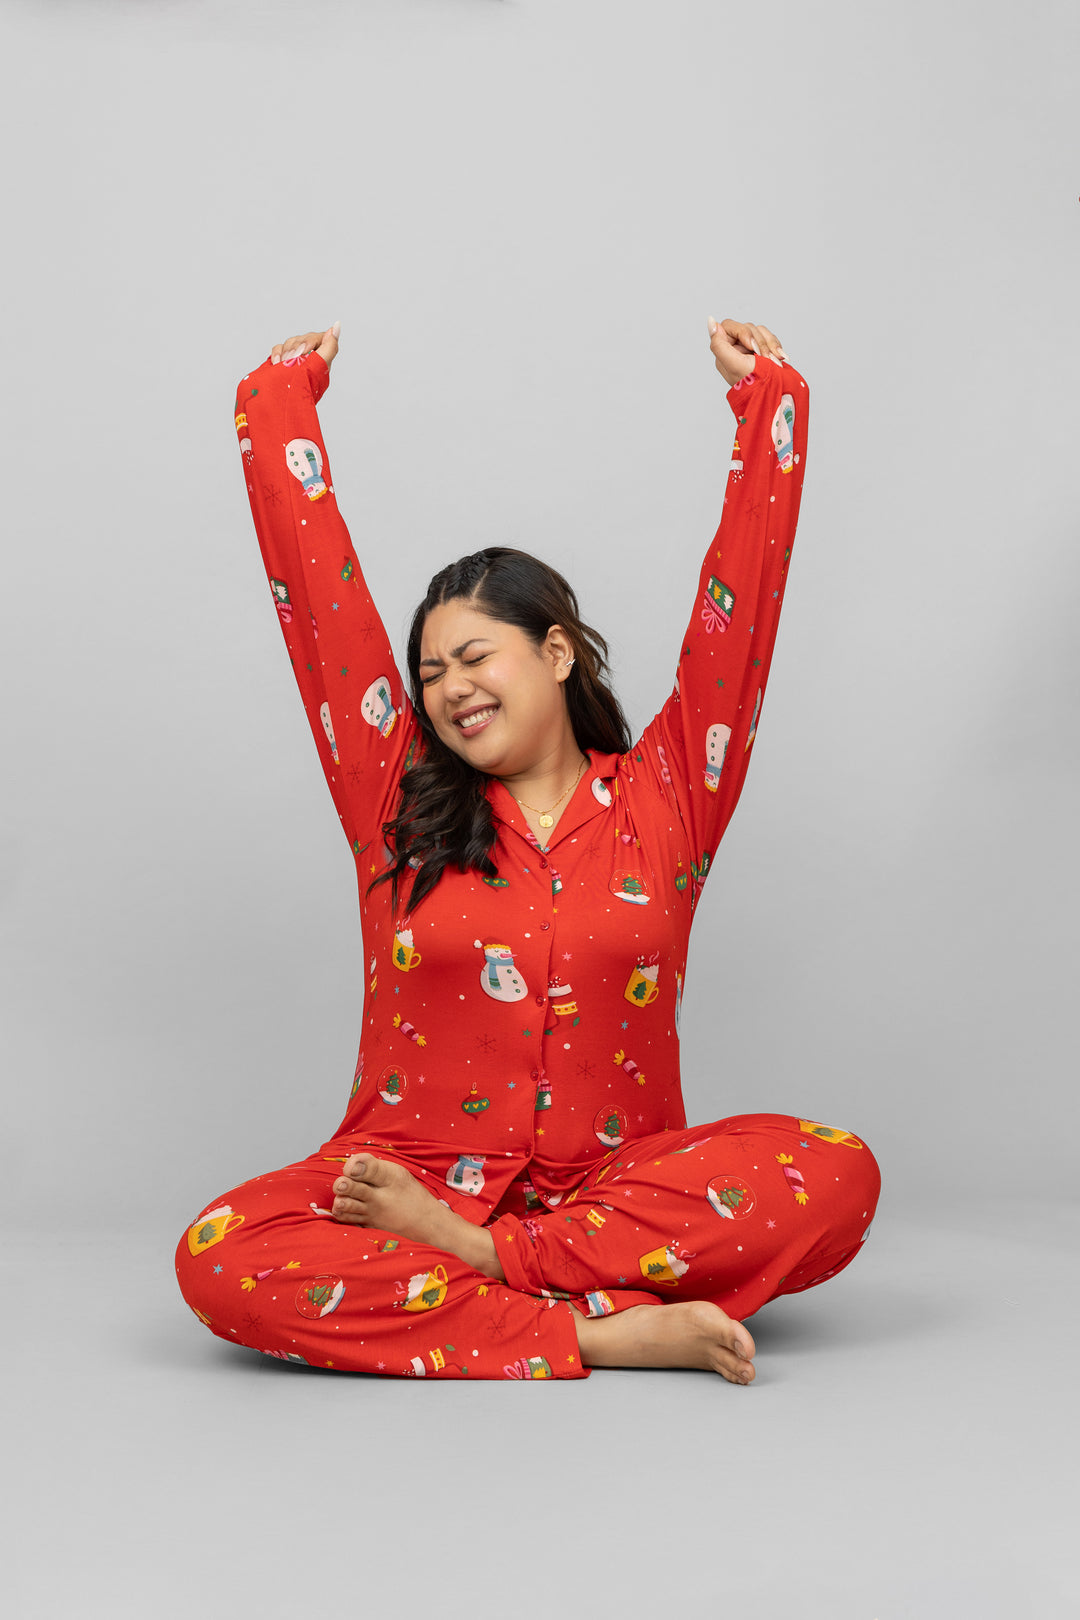 Christmas Full Sleeves Button Down Pajama Set